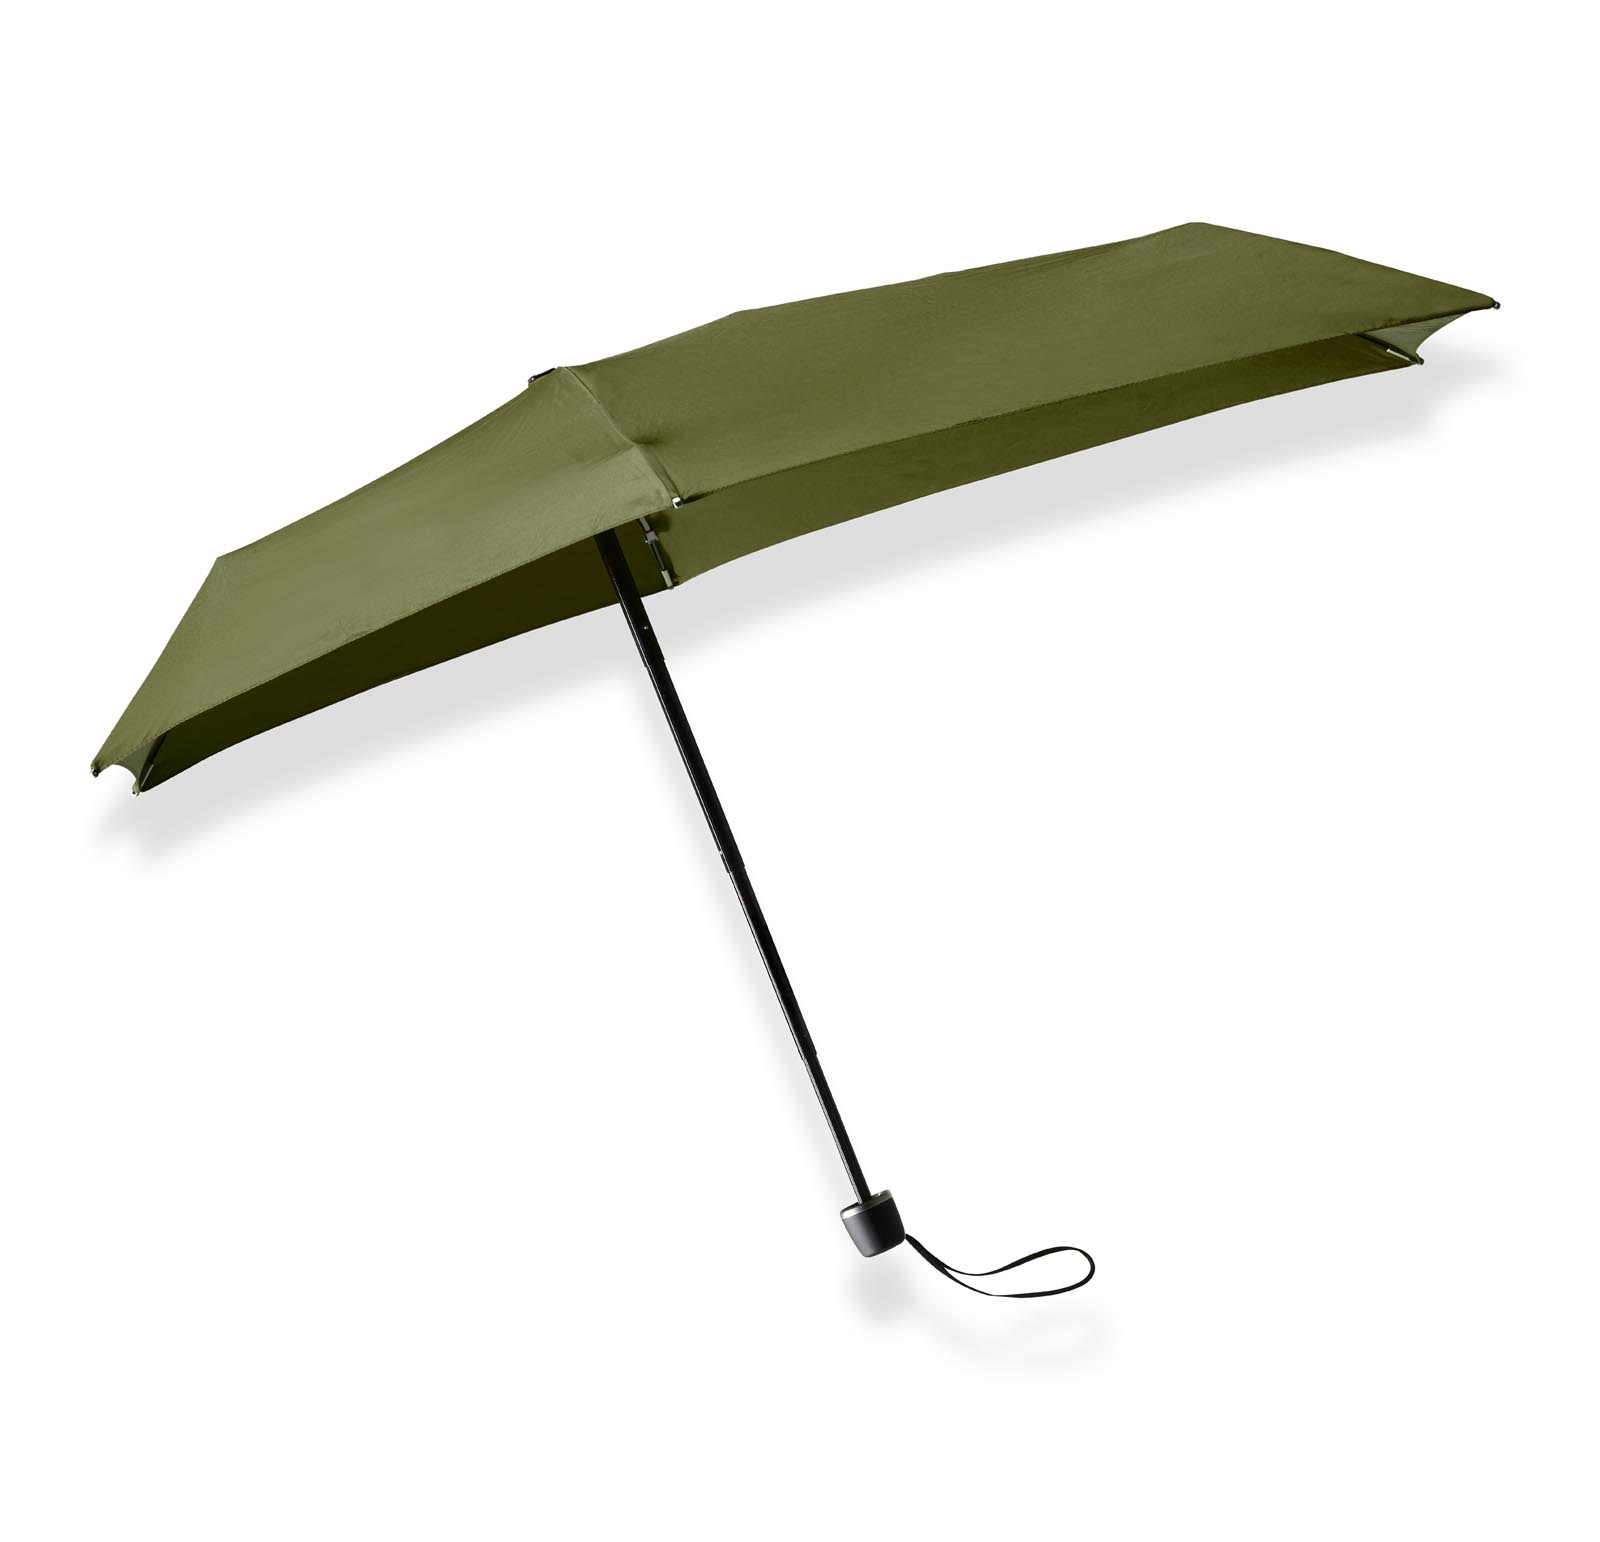 Binnenshuis probleem oogsten Groene opvouwbare paraplu micro kopen? senz° micro cedar green